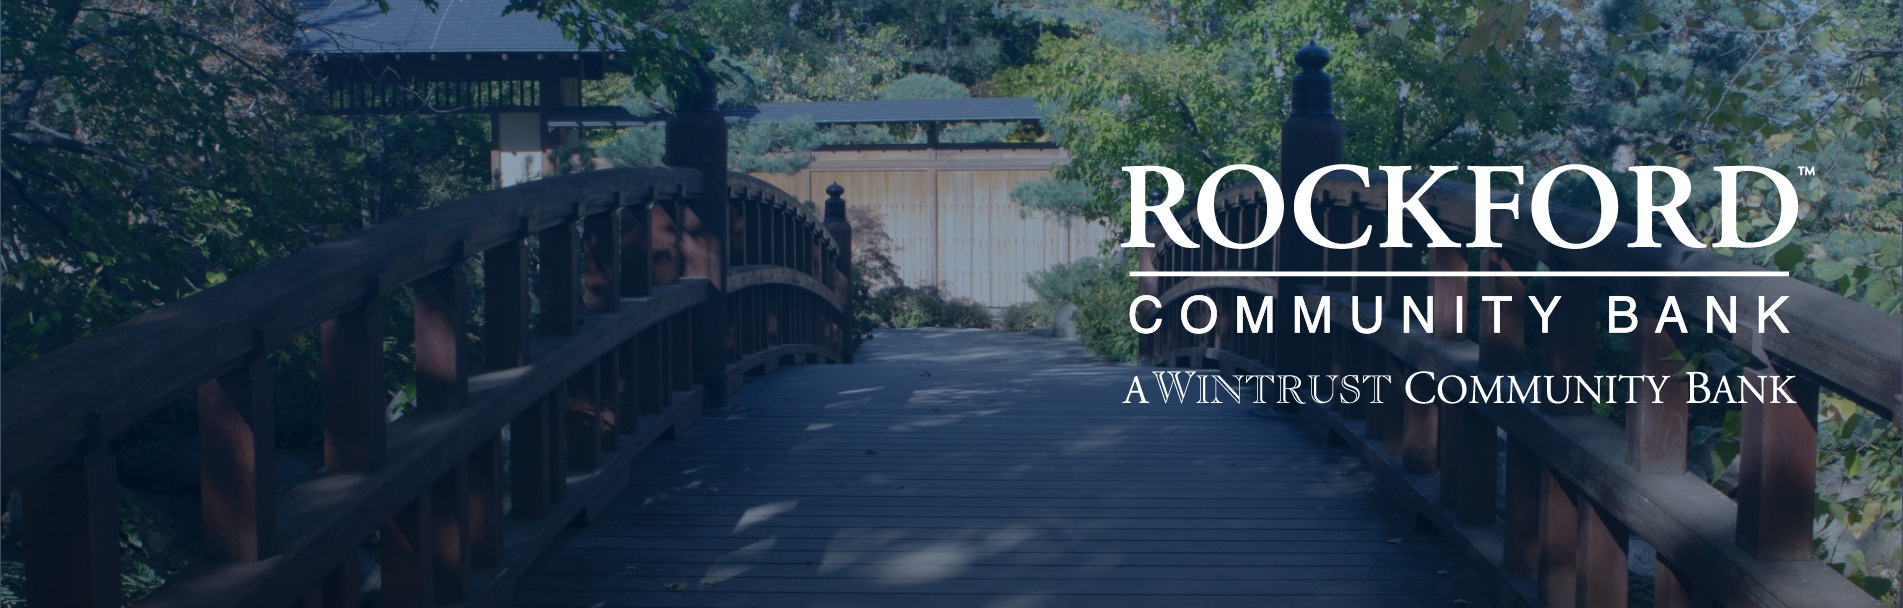 COMING SOON: ROCKFORD COMMUNITY BANK